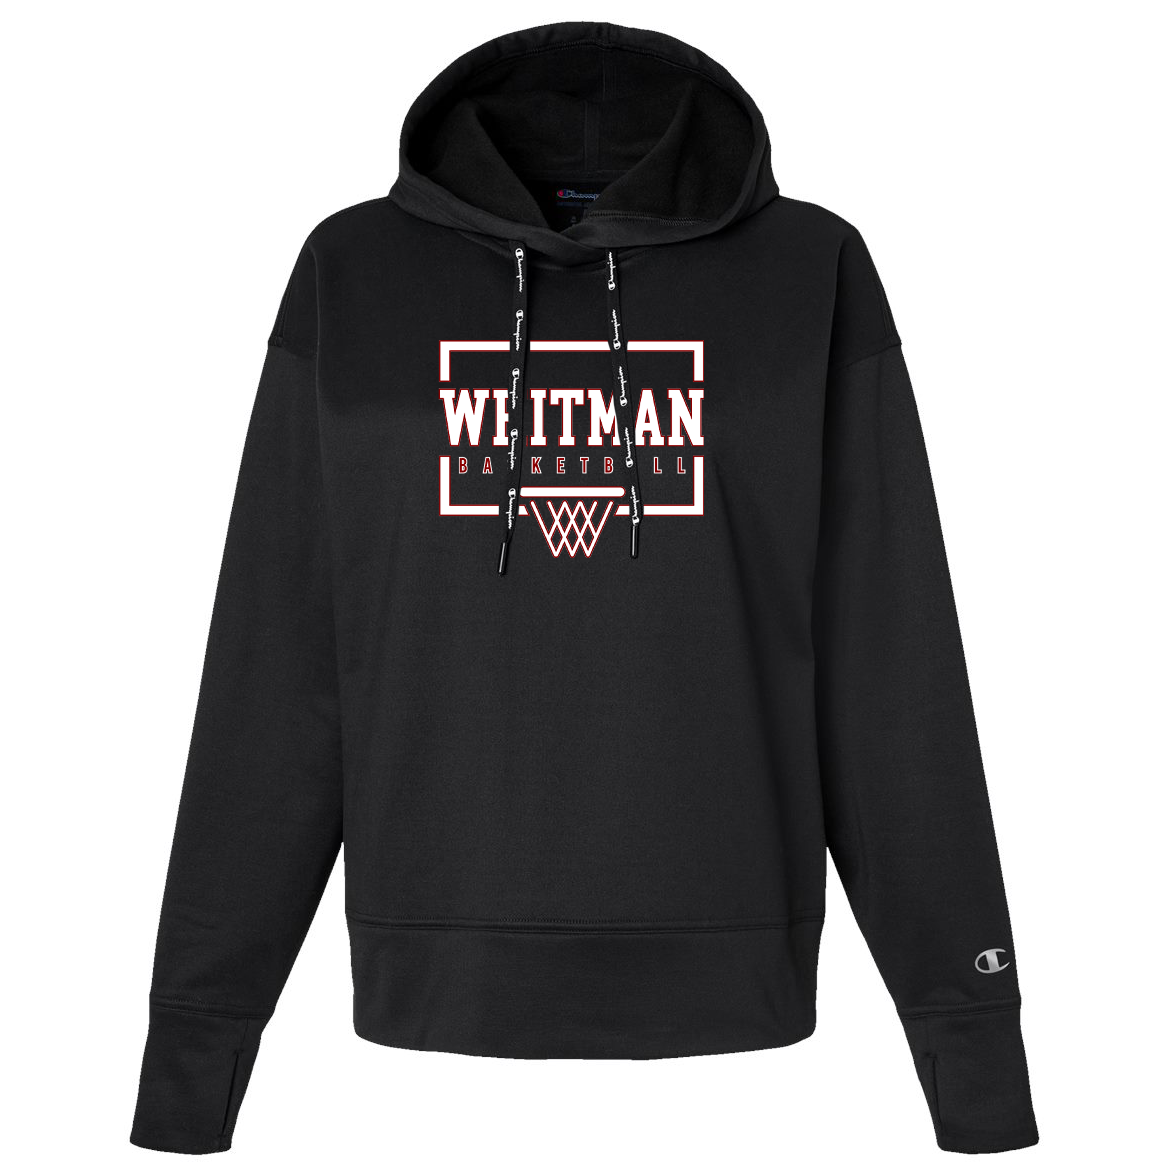 Whitman Women's Basketball Champion Women's Sport Hoodie